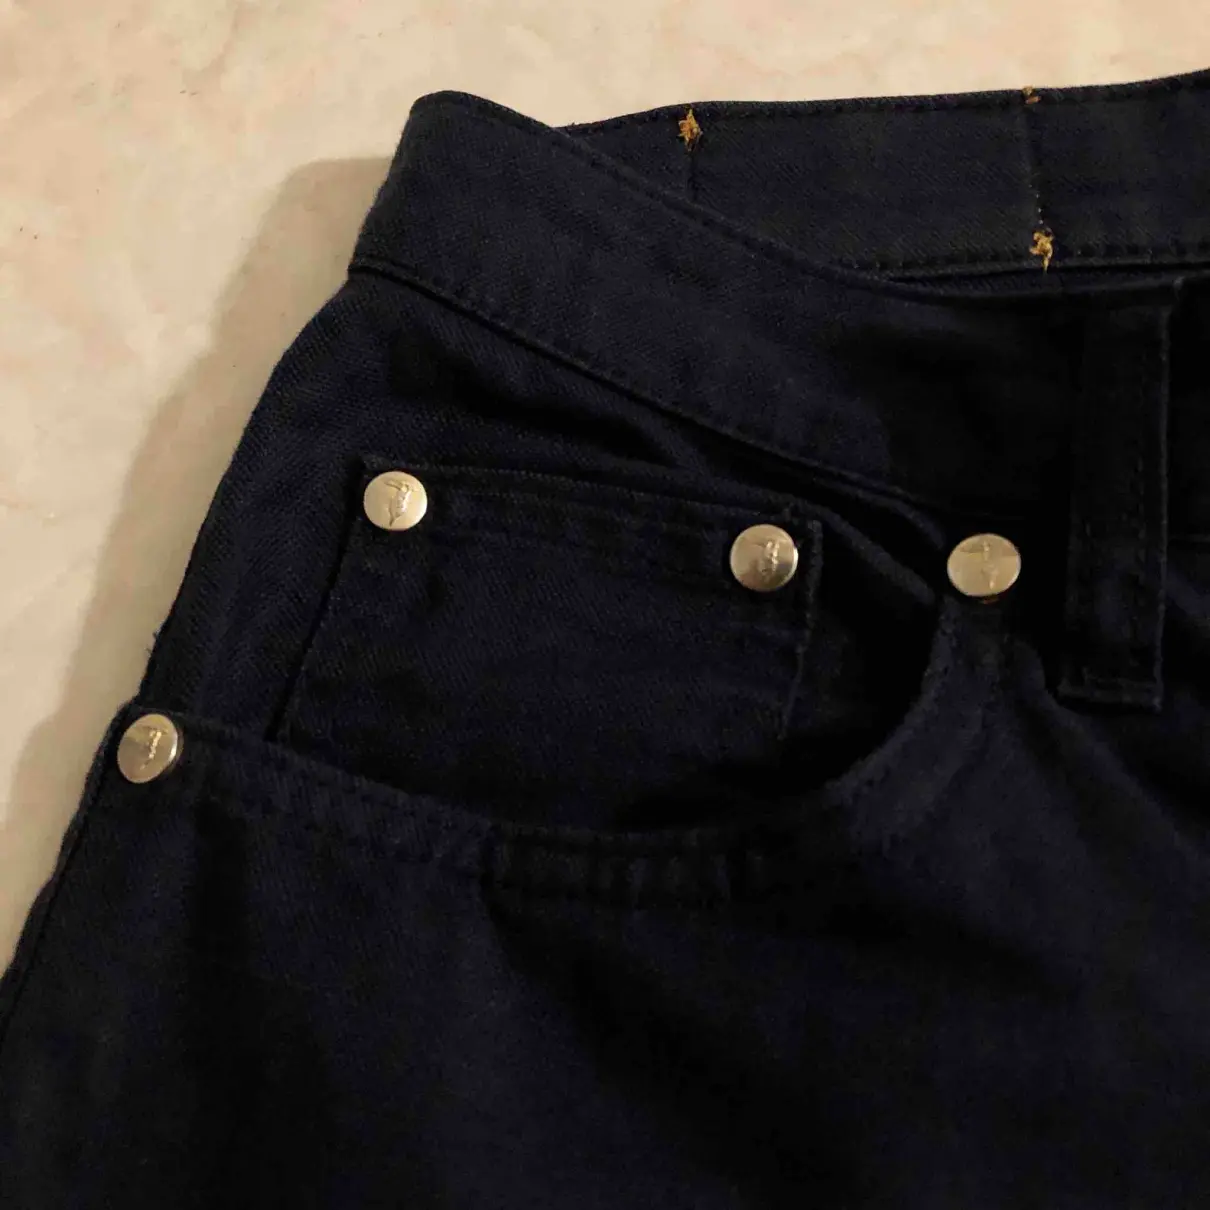 Buy Trussardi Jeans Straight jeans online